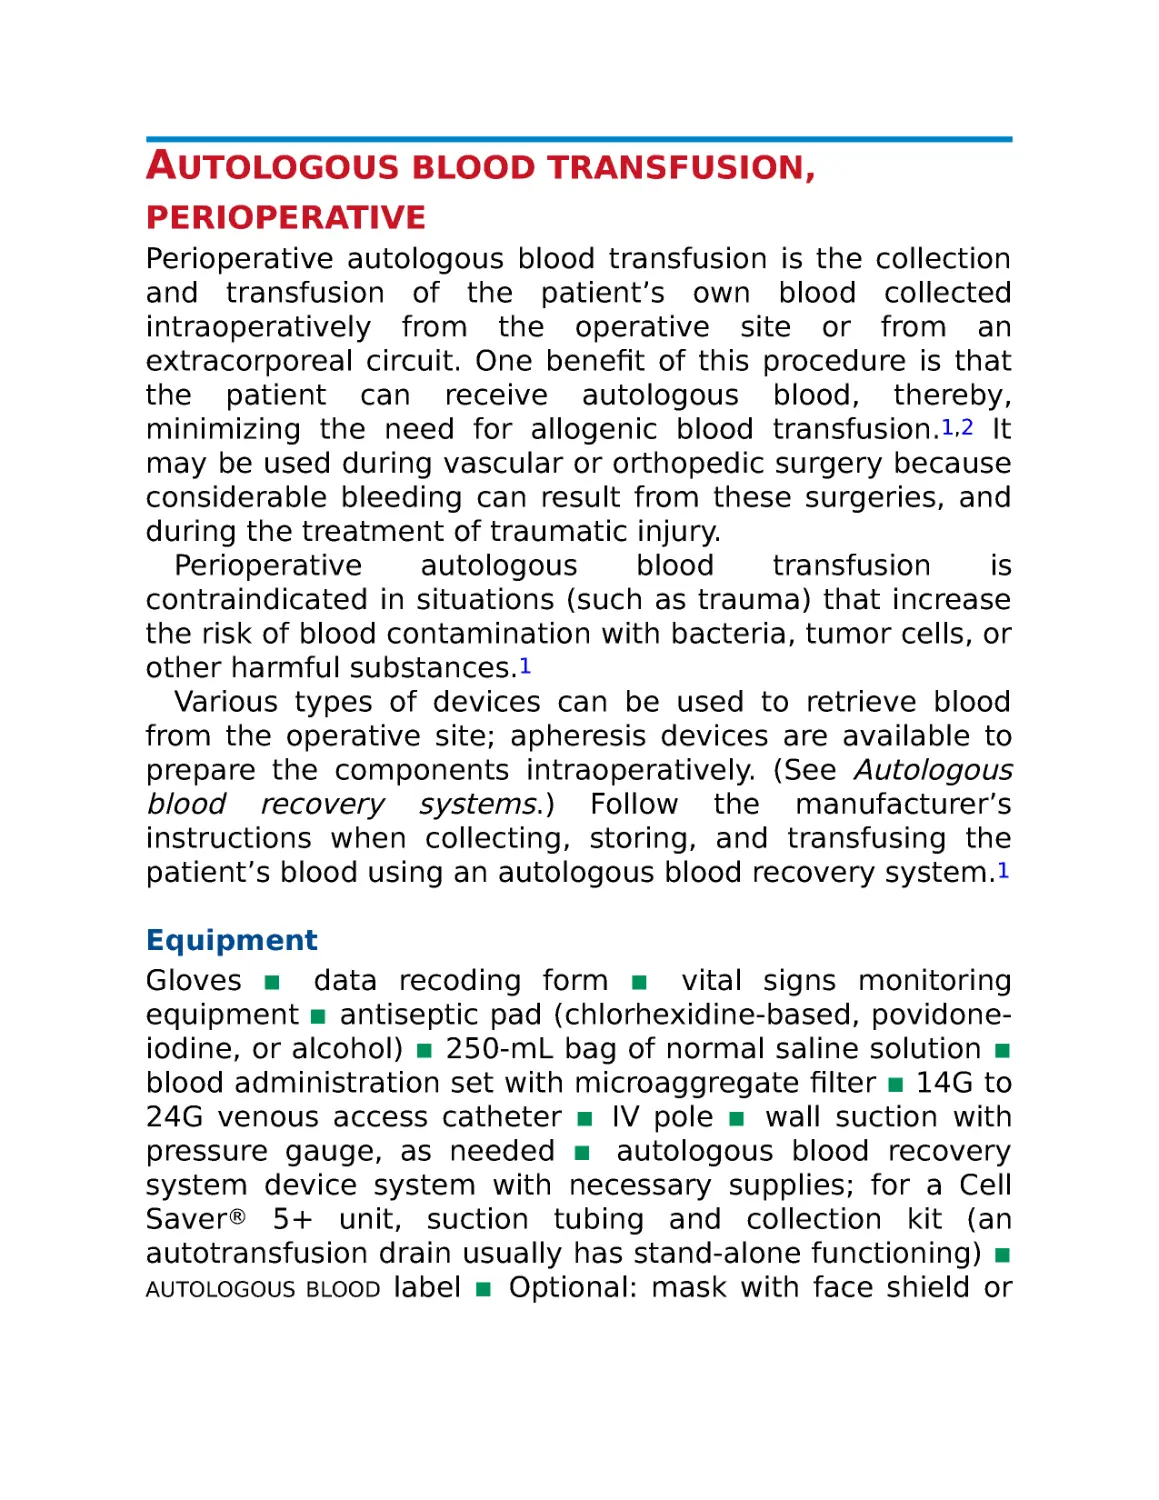 Autologous blood transfusion, perioperative